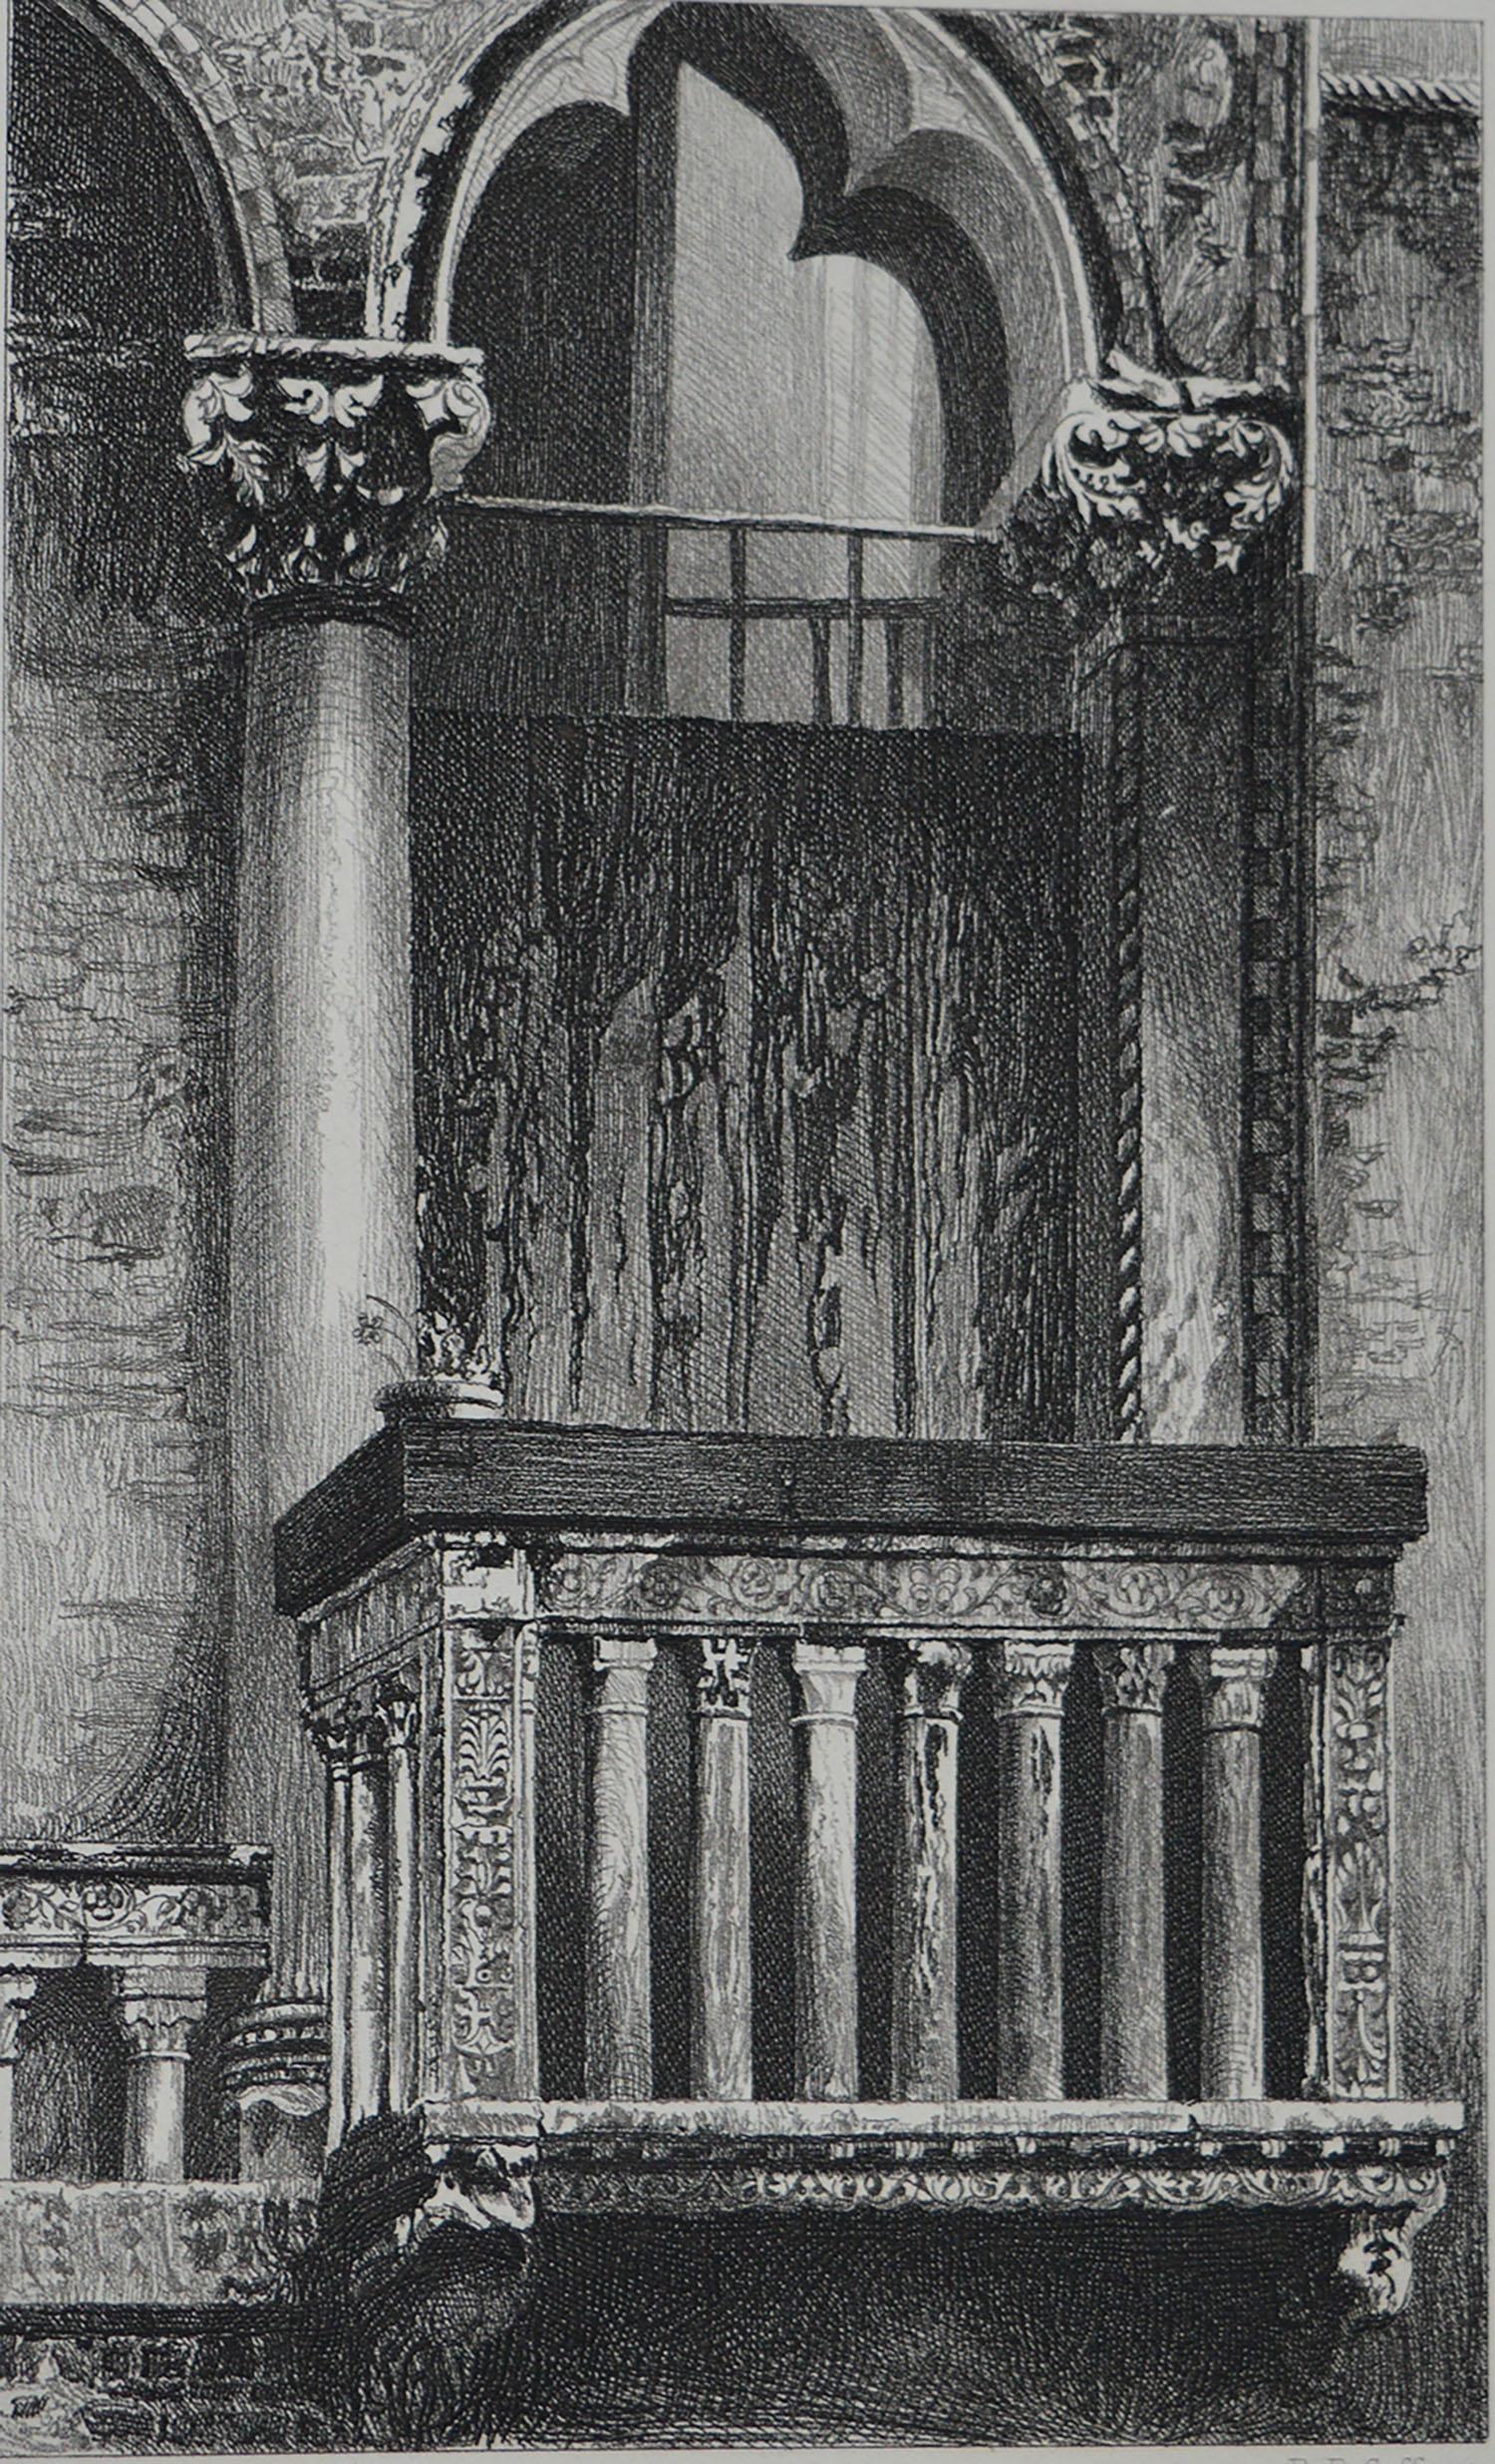 Gothic Revival Original Antique Architectural Print by John Ruskin, circa 1880, 'Venice'